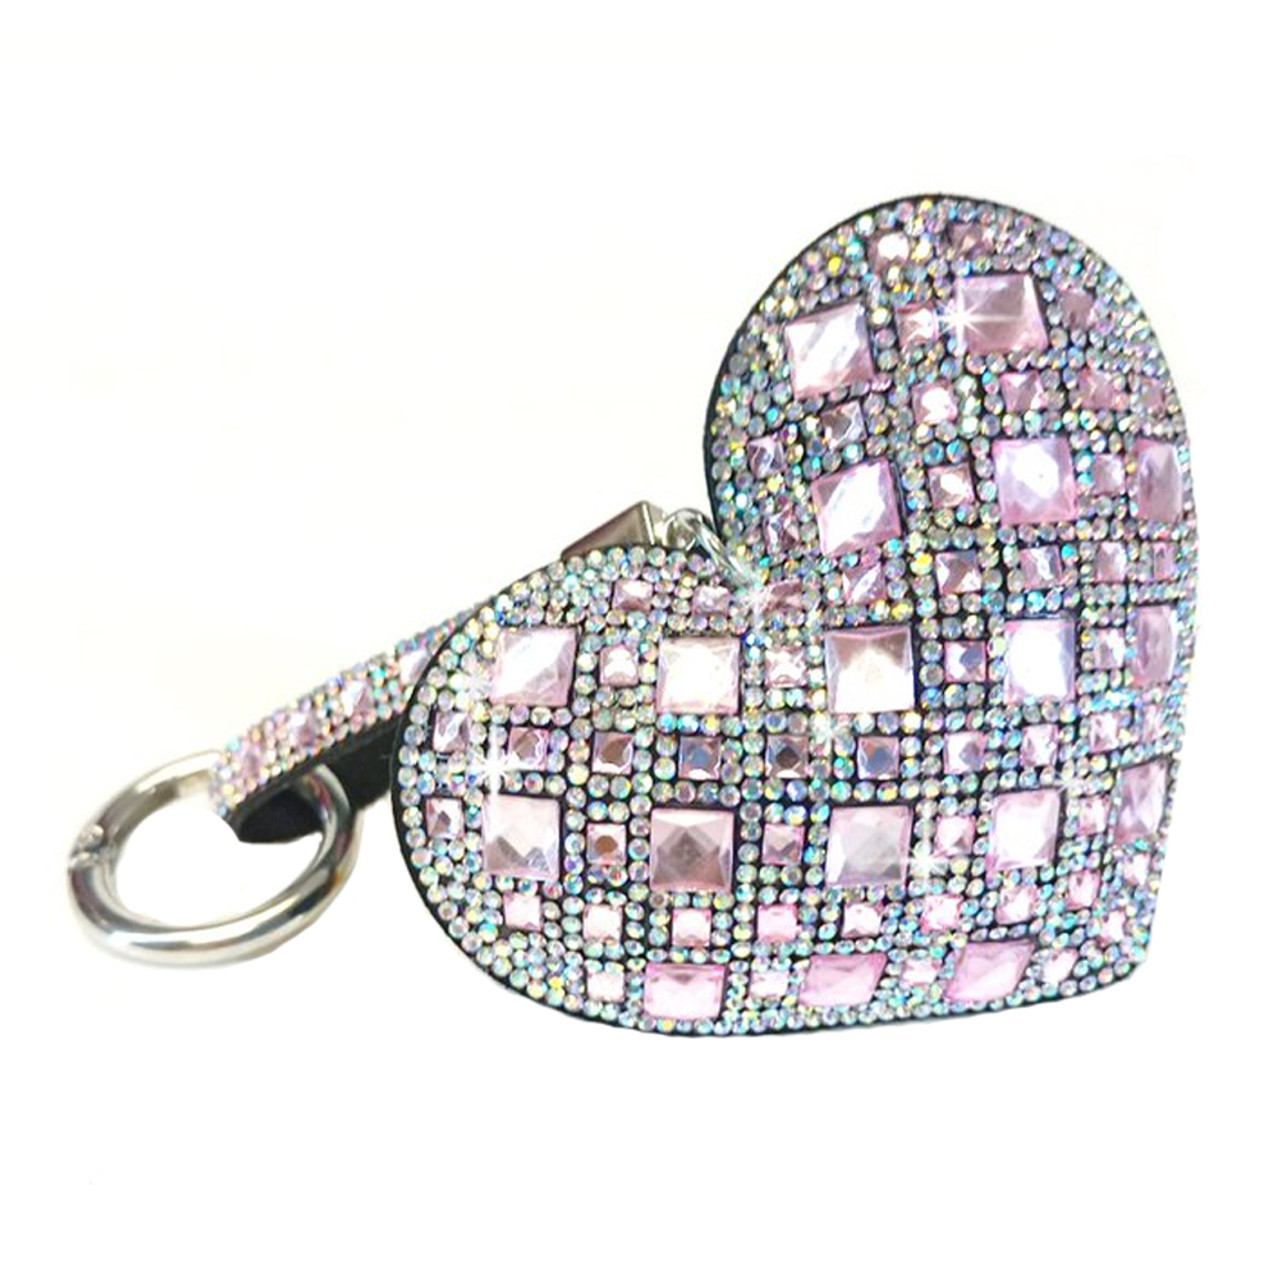 Cute pom pom heart key chain book bag charm